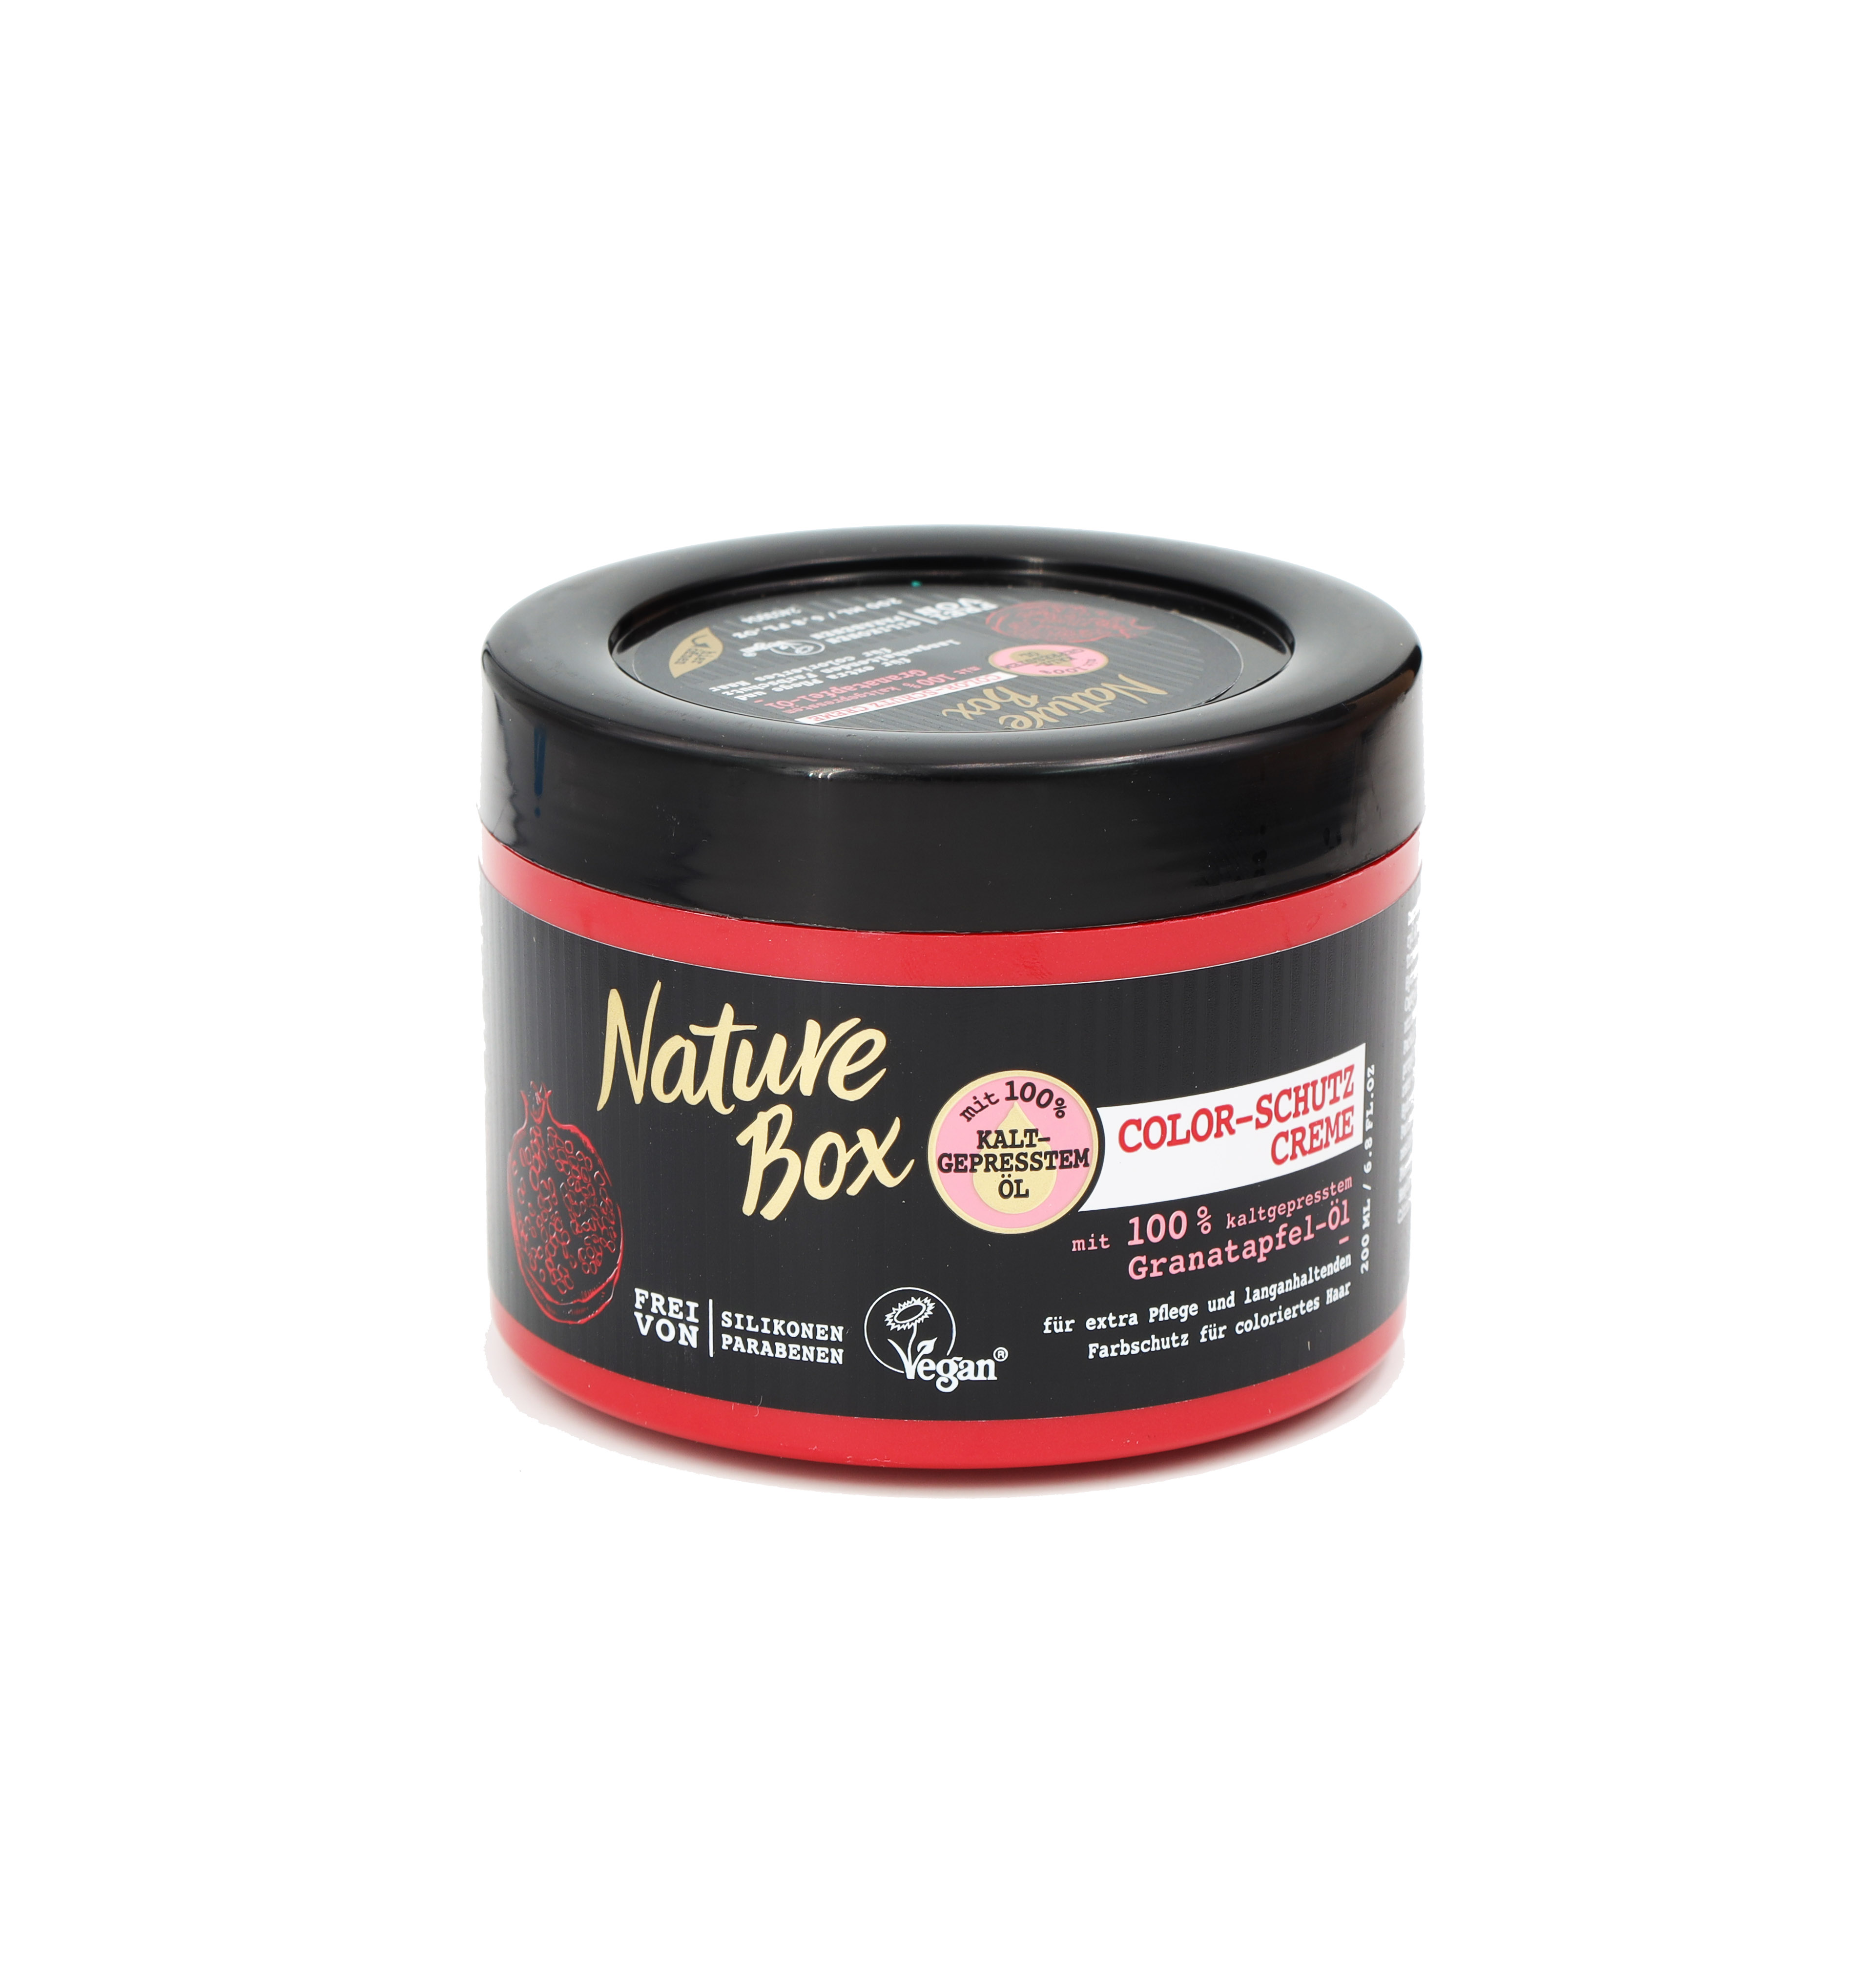 Nature Box Color-Schutz Creme Granatapfel Öl 200ml